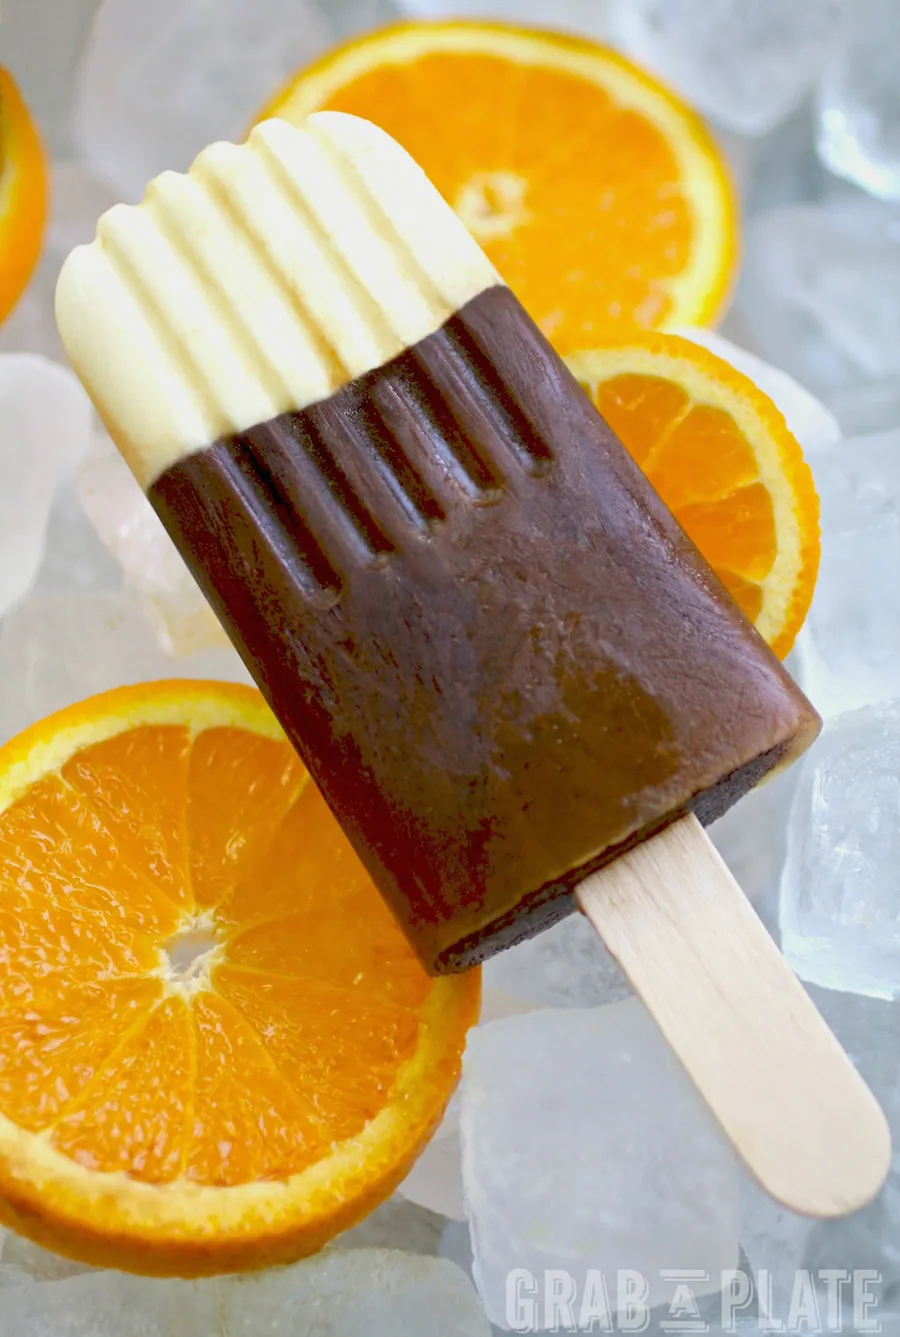 Enjoy the warm weather with a treat like Chocolate-Orange Frozen Latte Pops